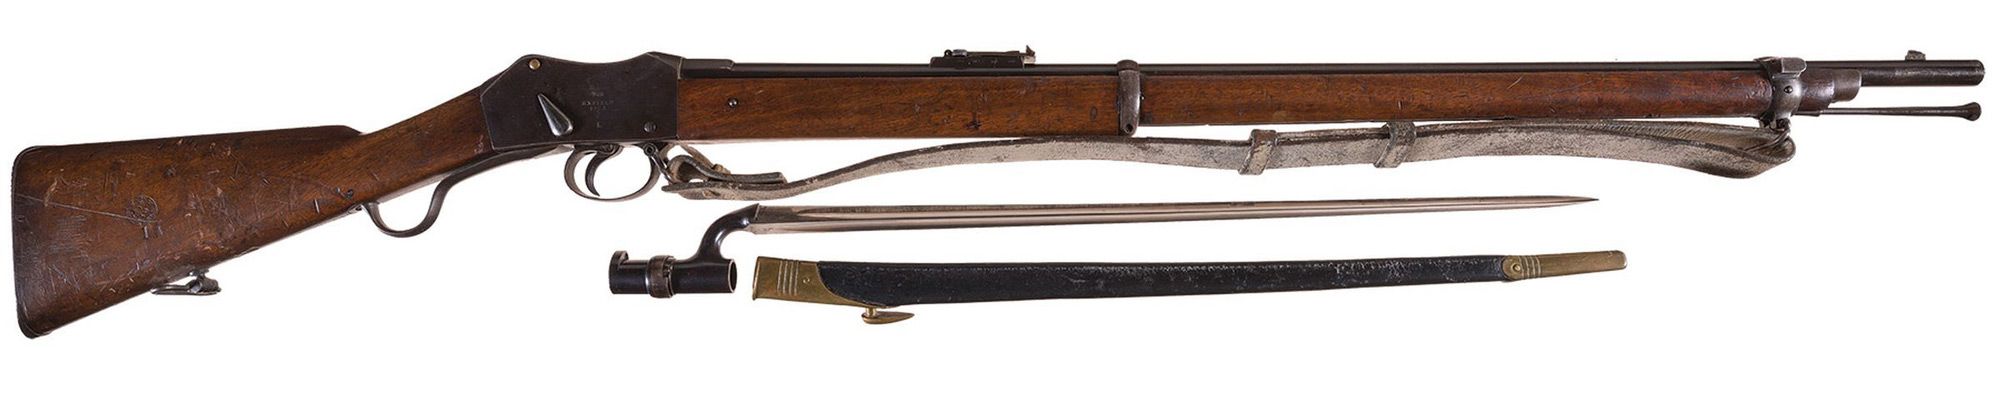 Martini-Henry rifle